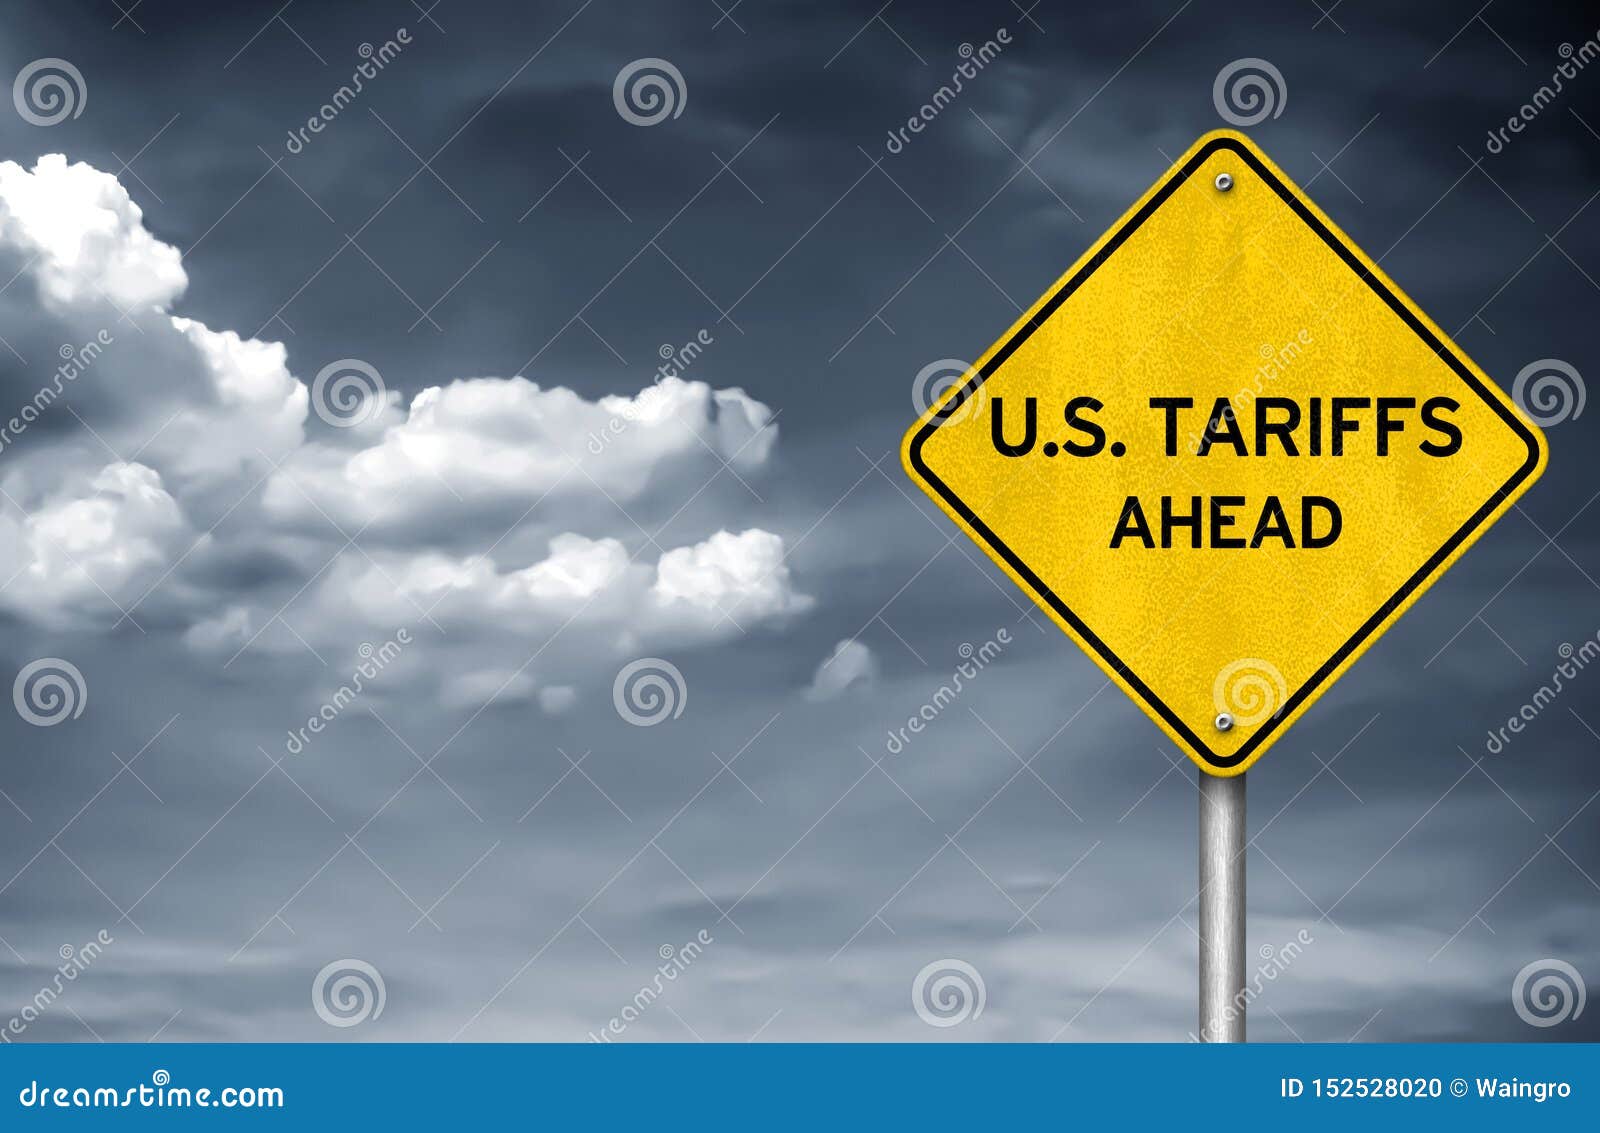 us tariffs ahead - road sign 